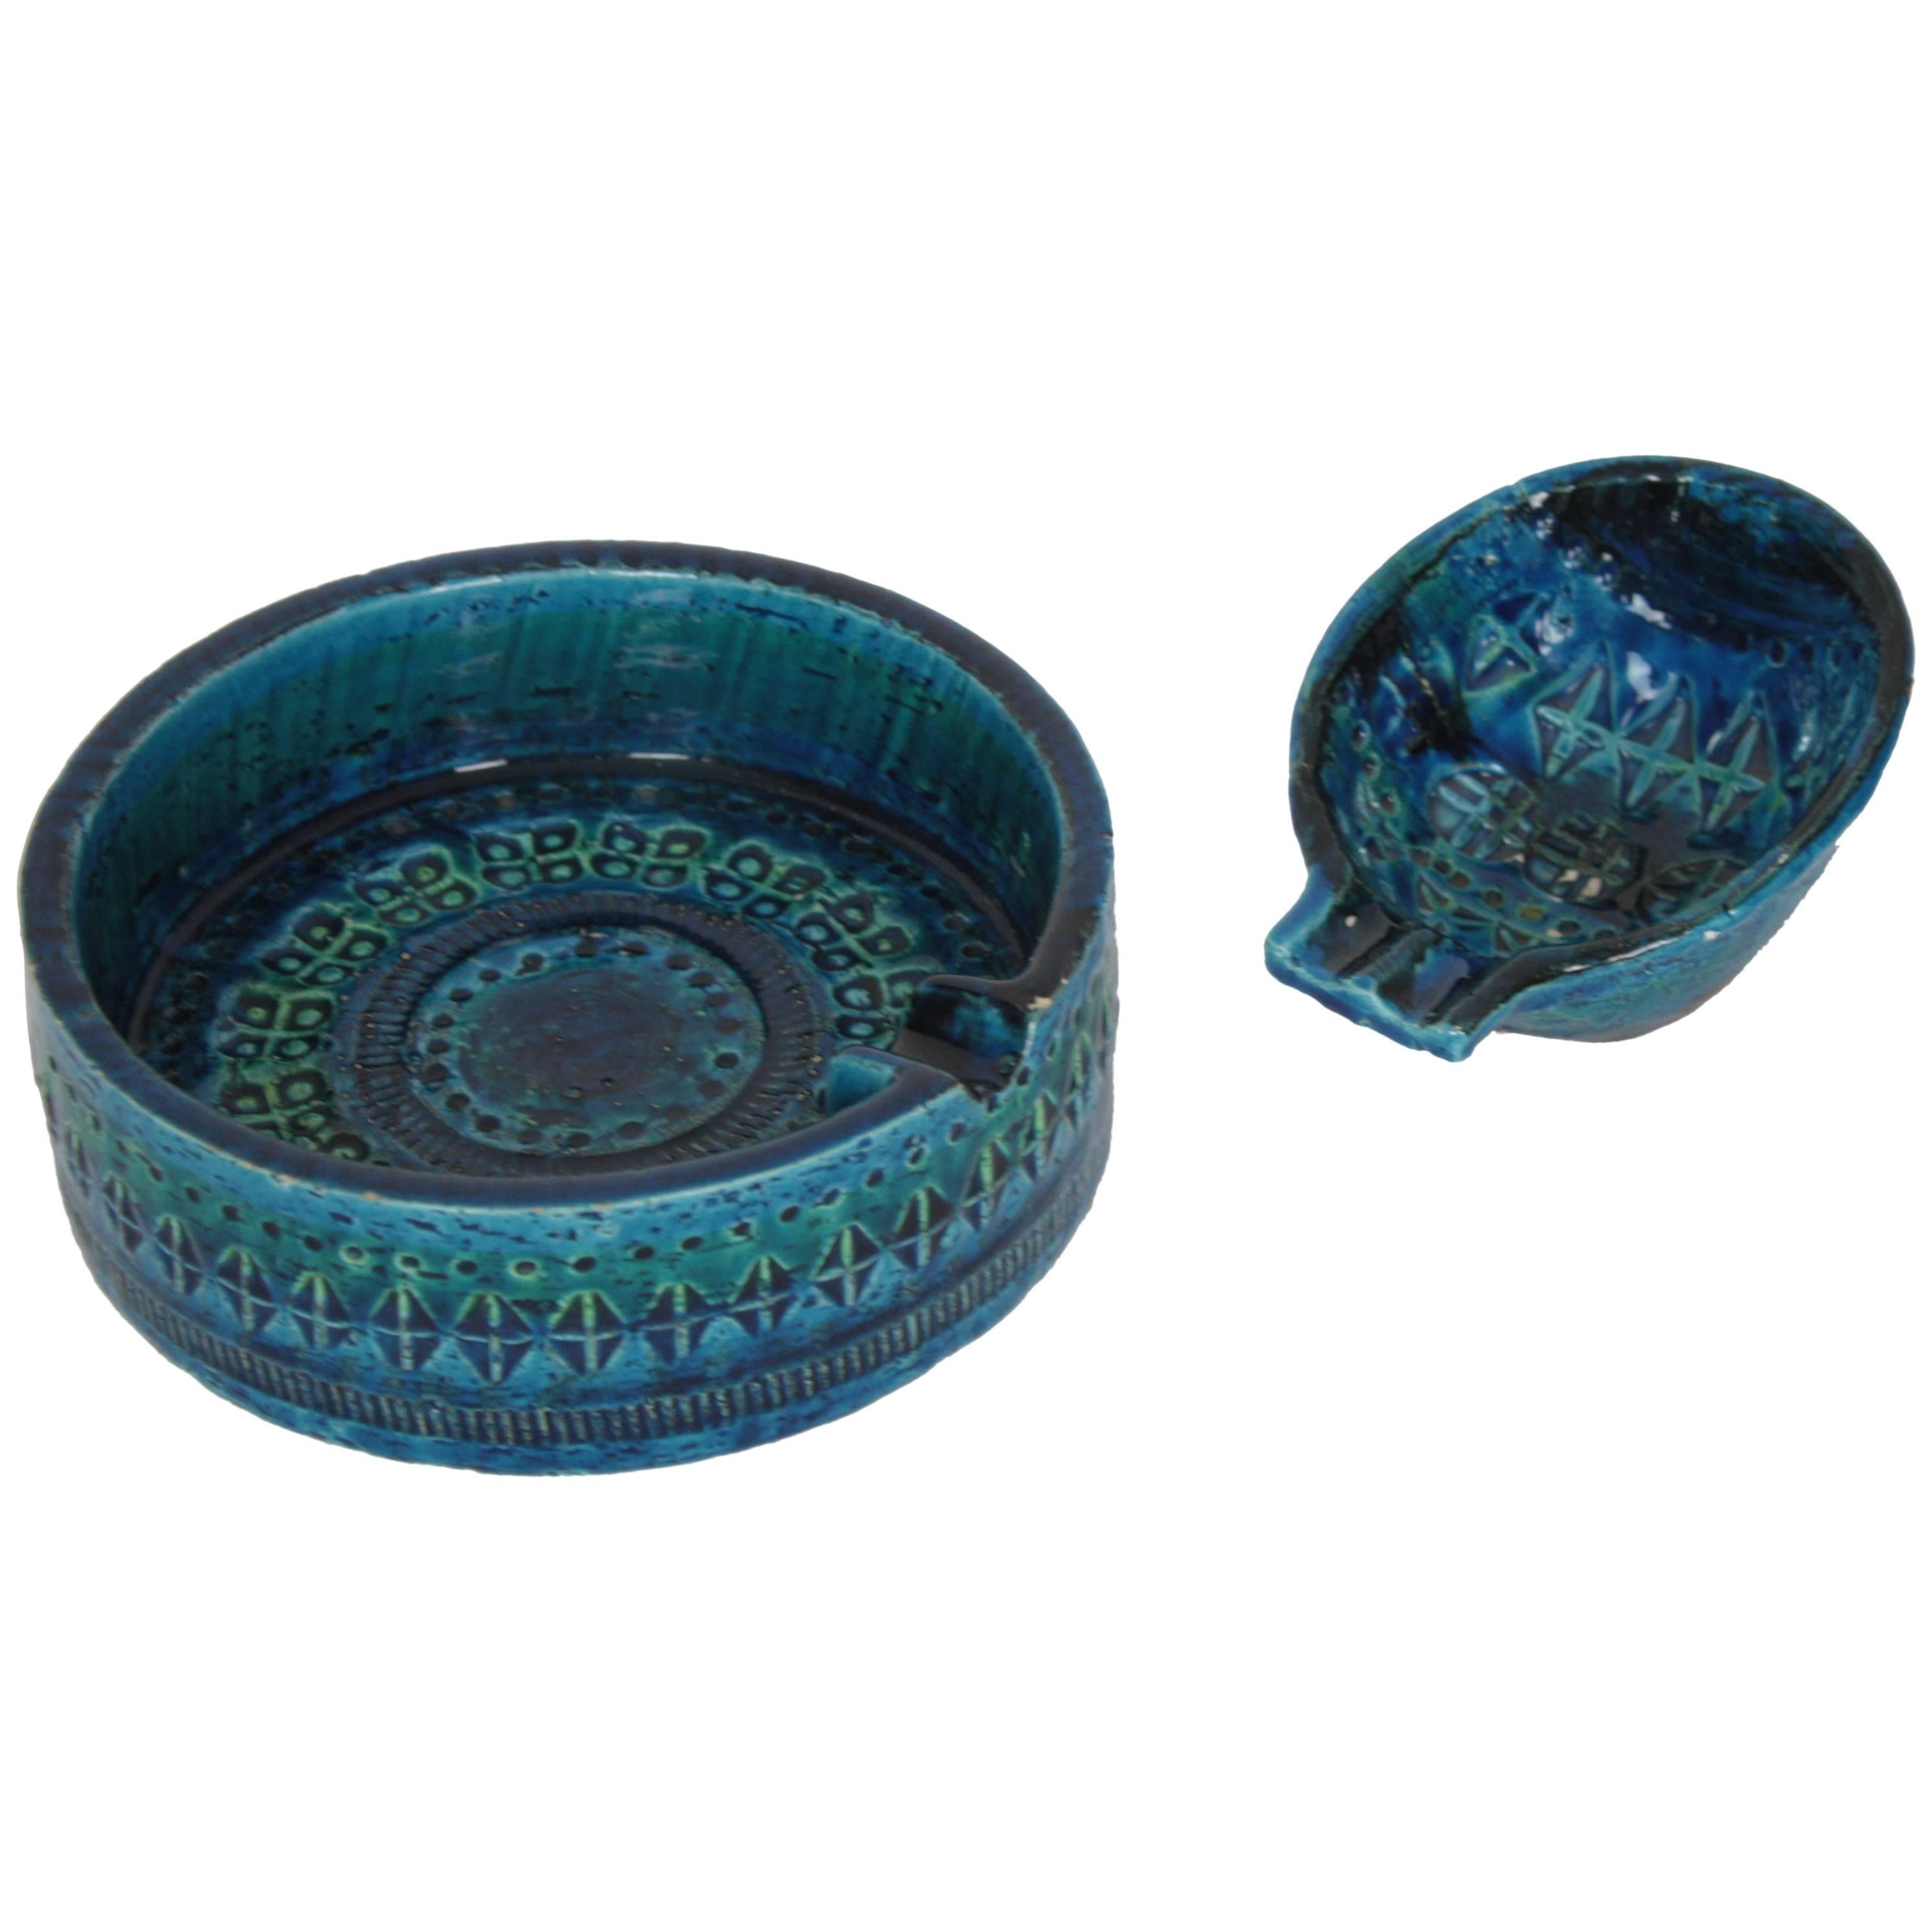 Aldo Londi for Bitossi Set of Rimini Blue Glazed Ceramic Ashtrays